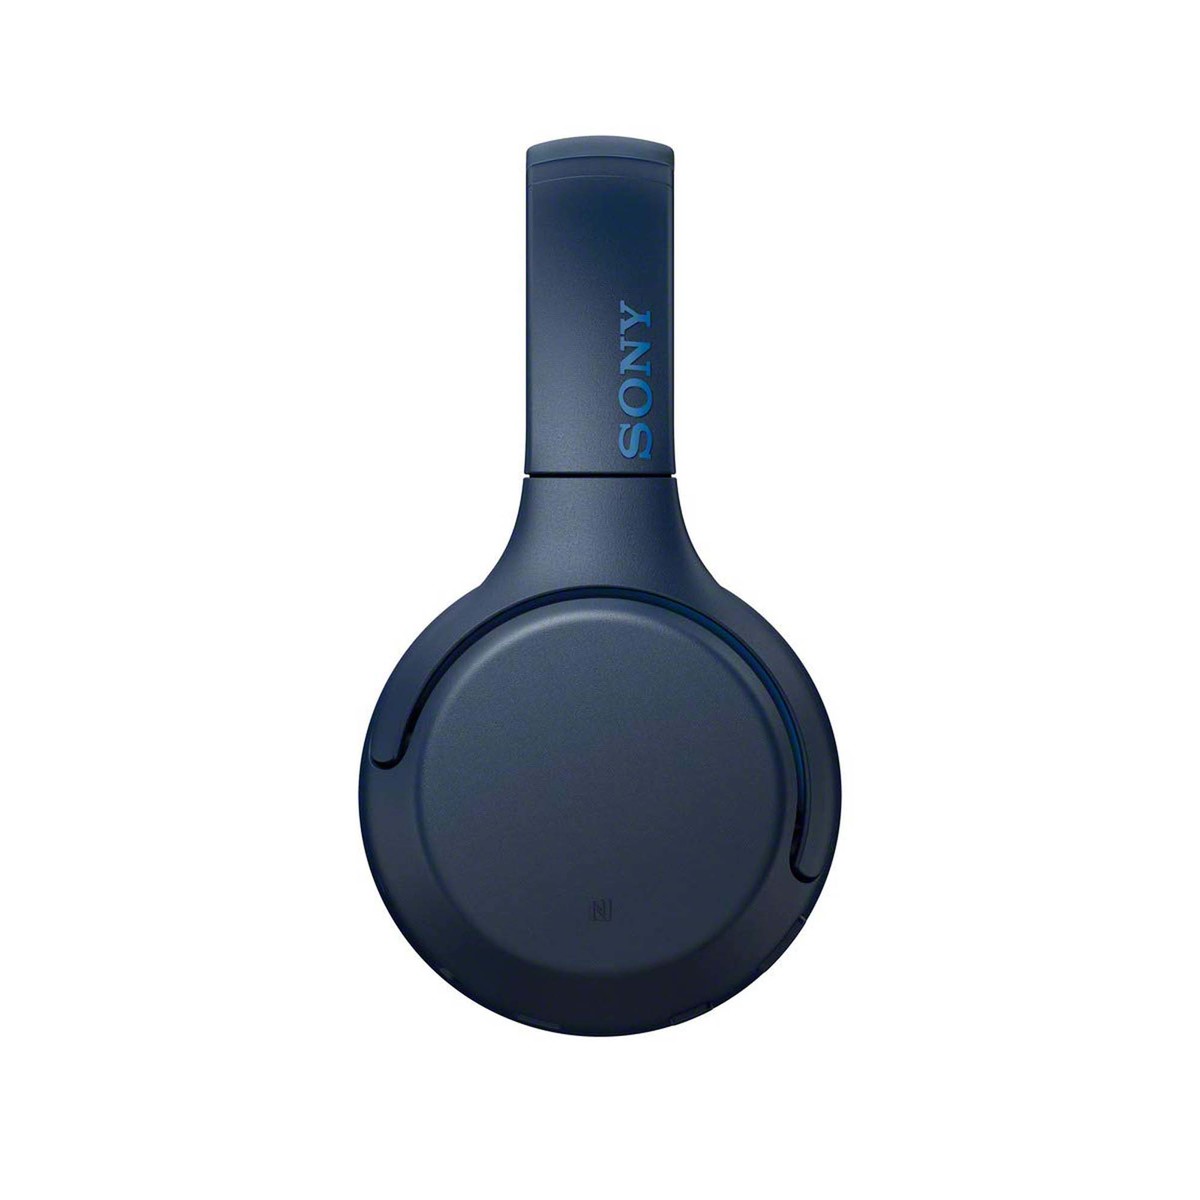 Sony Extra Bass Wireless Bluetooth Headphones WH-XB700 Blue